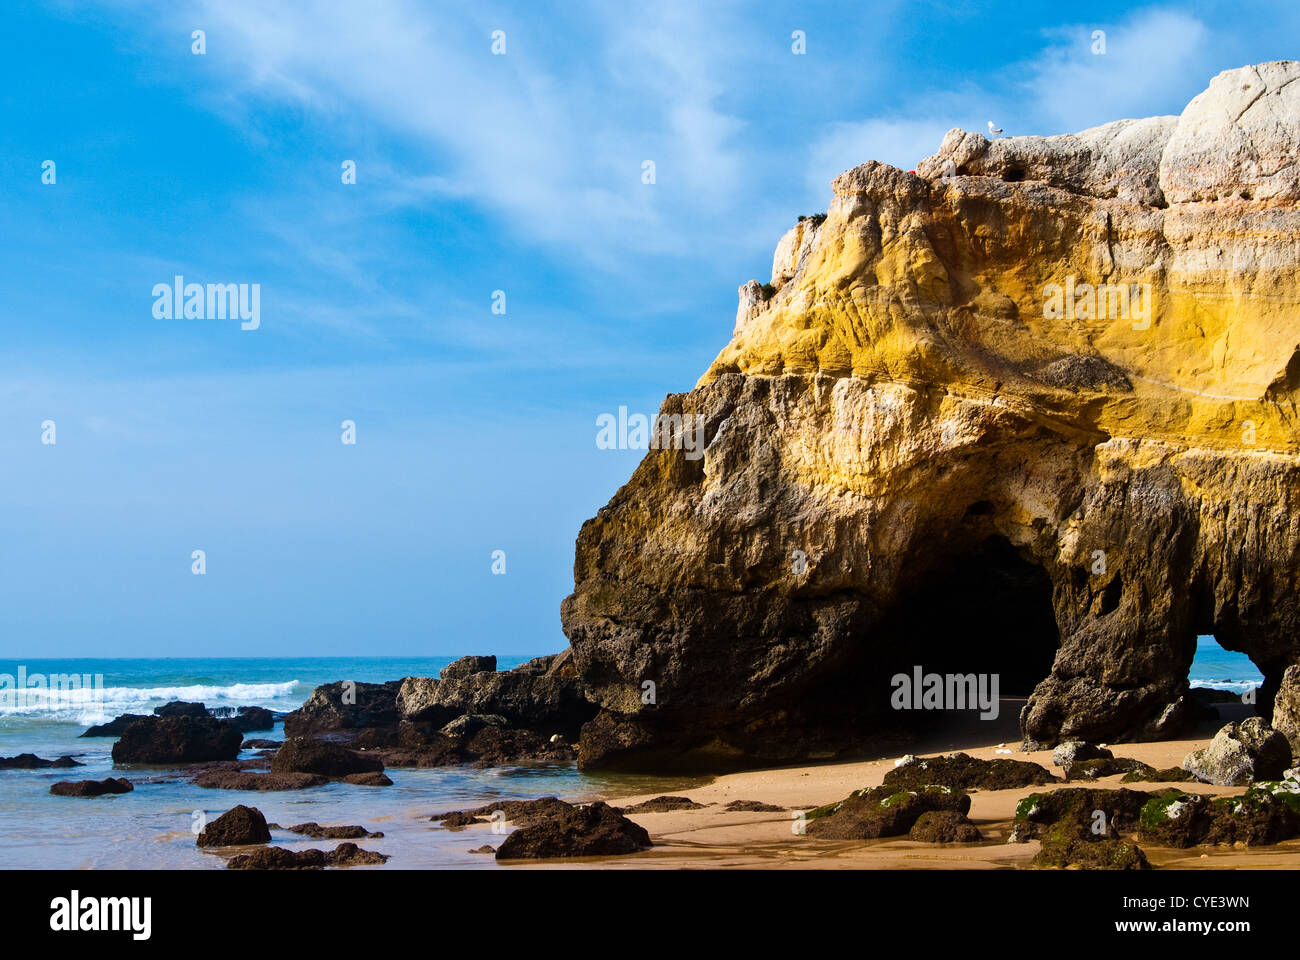 Praia da Rocha Strand am Atlantik im Süden Portugals Algarve Stockfoto